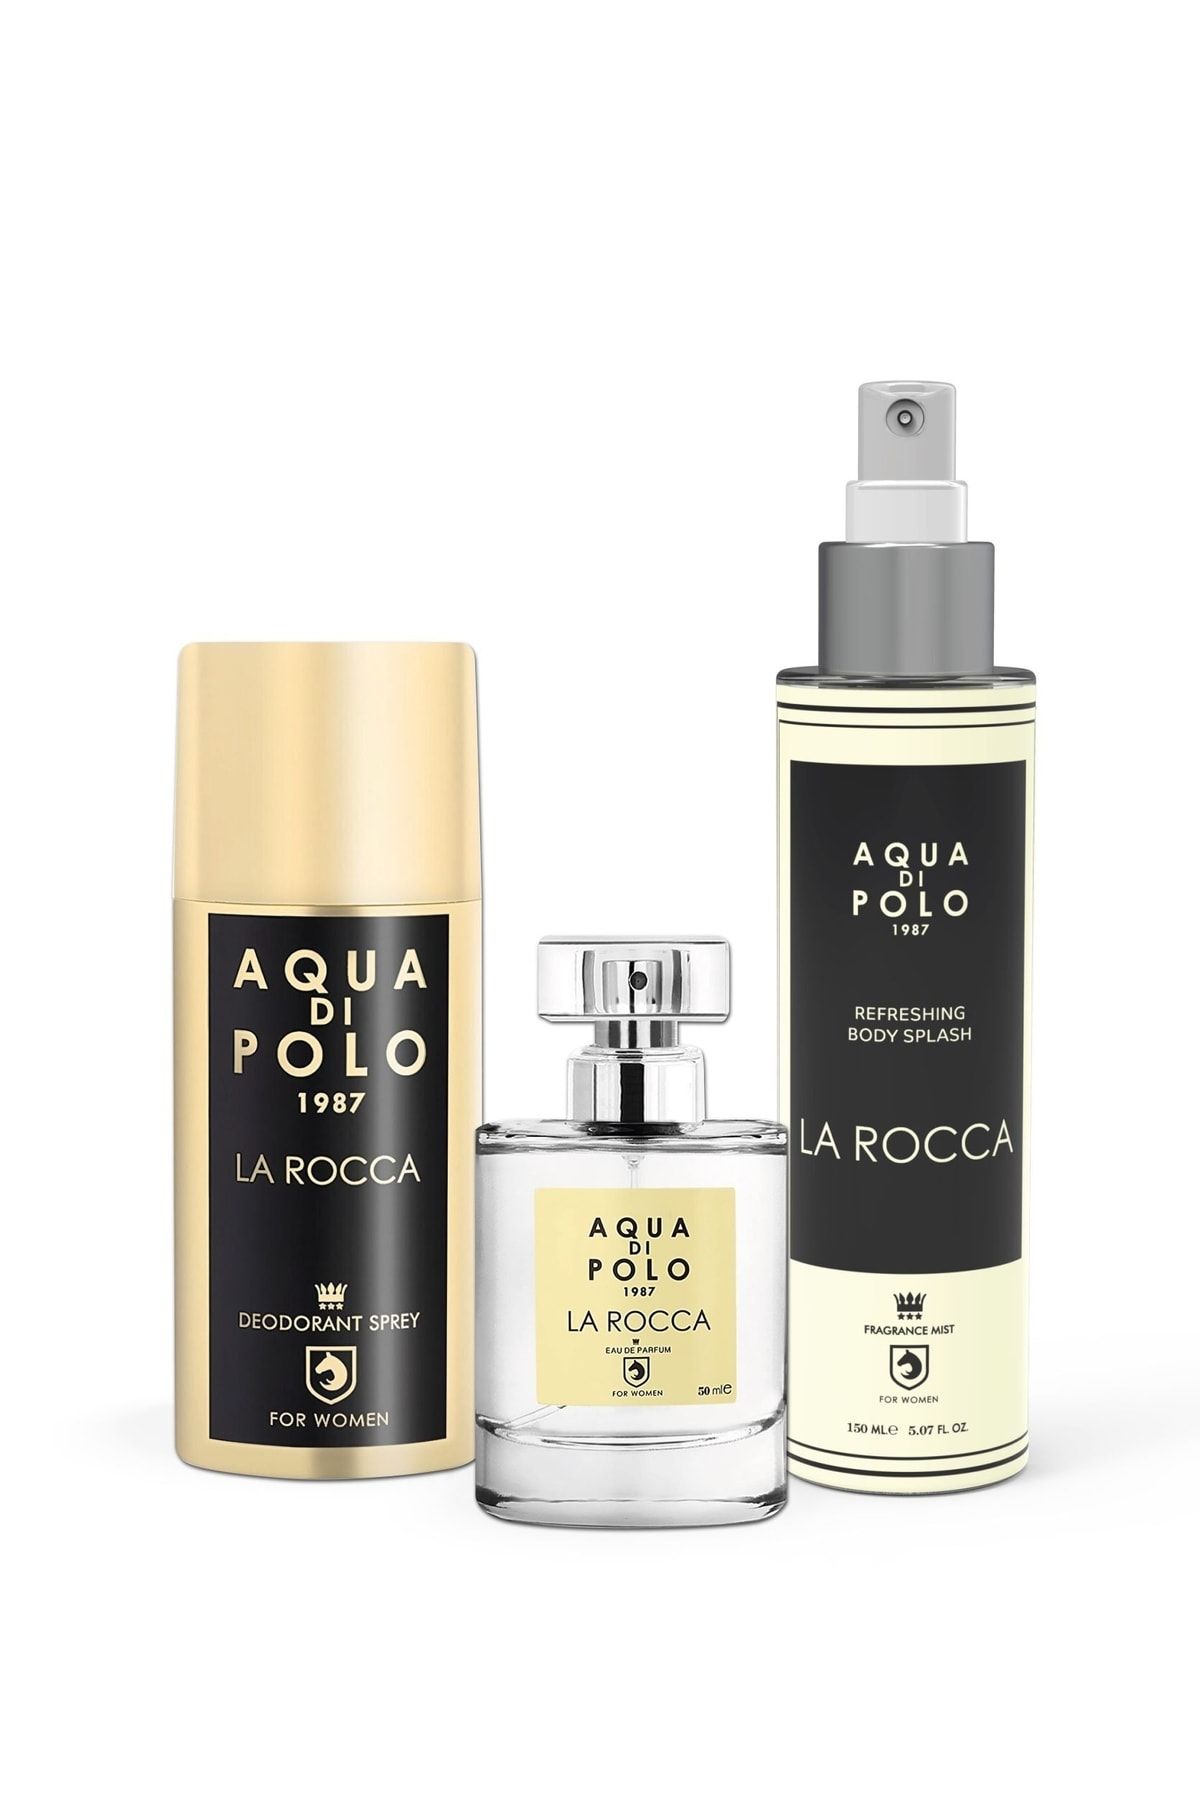 Aqua Di Polo 1987 3'lü La Rocca Kadın Parfüm Set Fırsatı Stcc021120